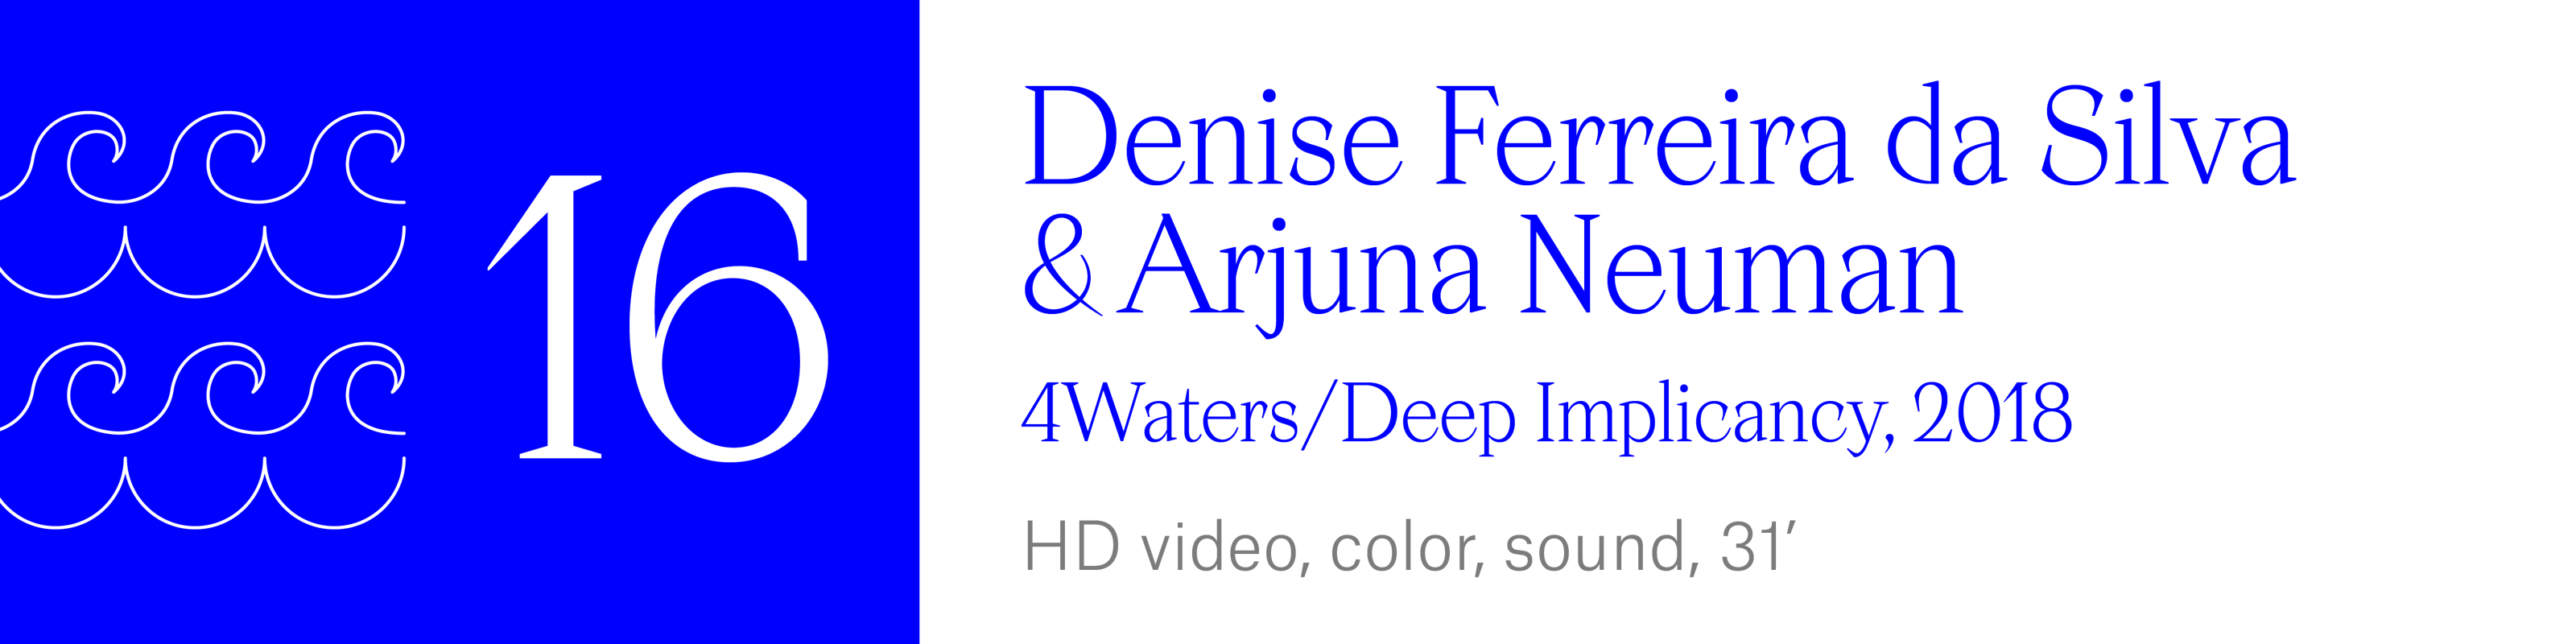 The Wave (16) - Denise Ferreira da Silva and Arjuna Neuman - 4Waters/Deep Implicancy, 2018. HD video, color, sound, 31 minutes.